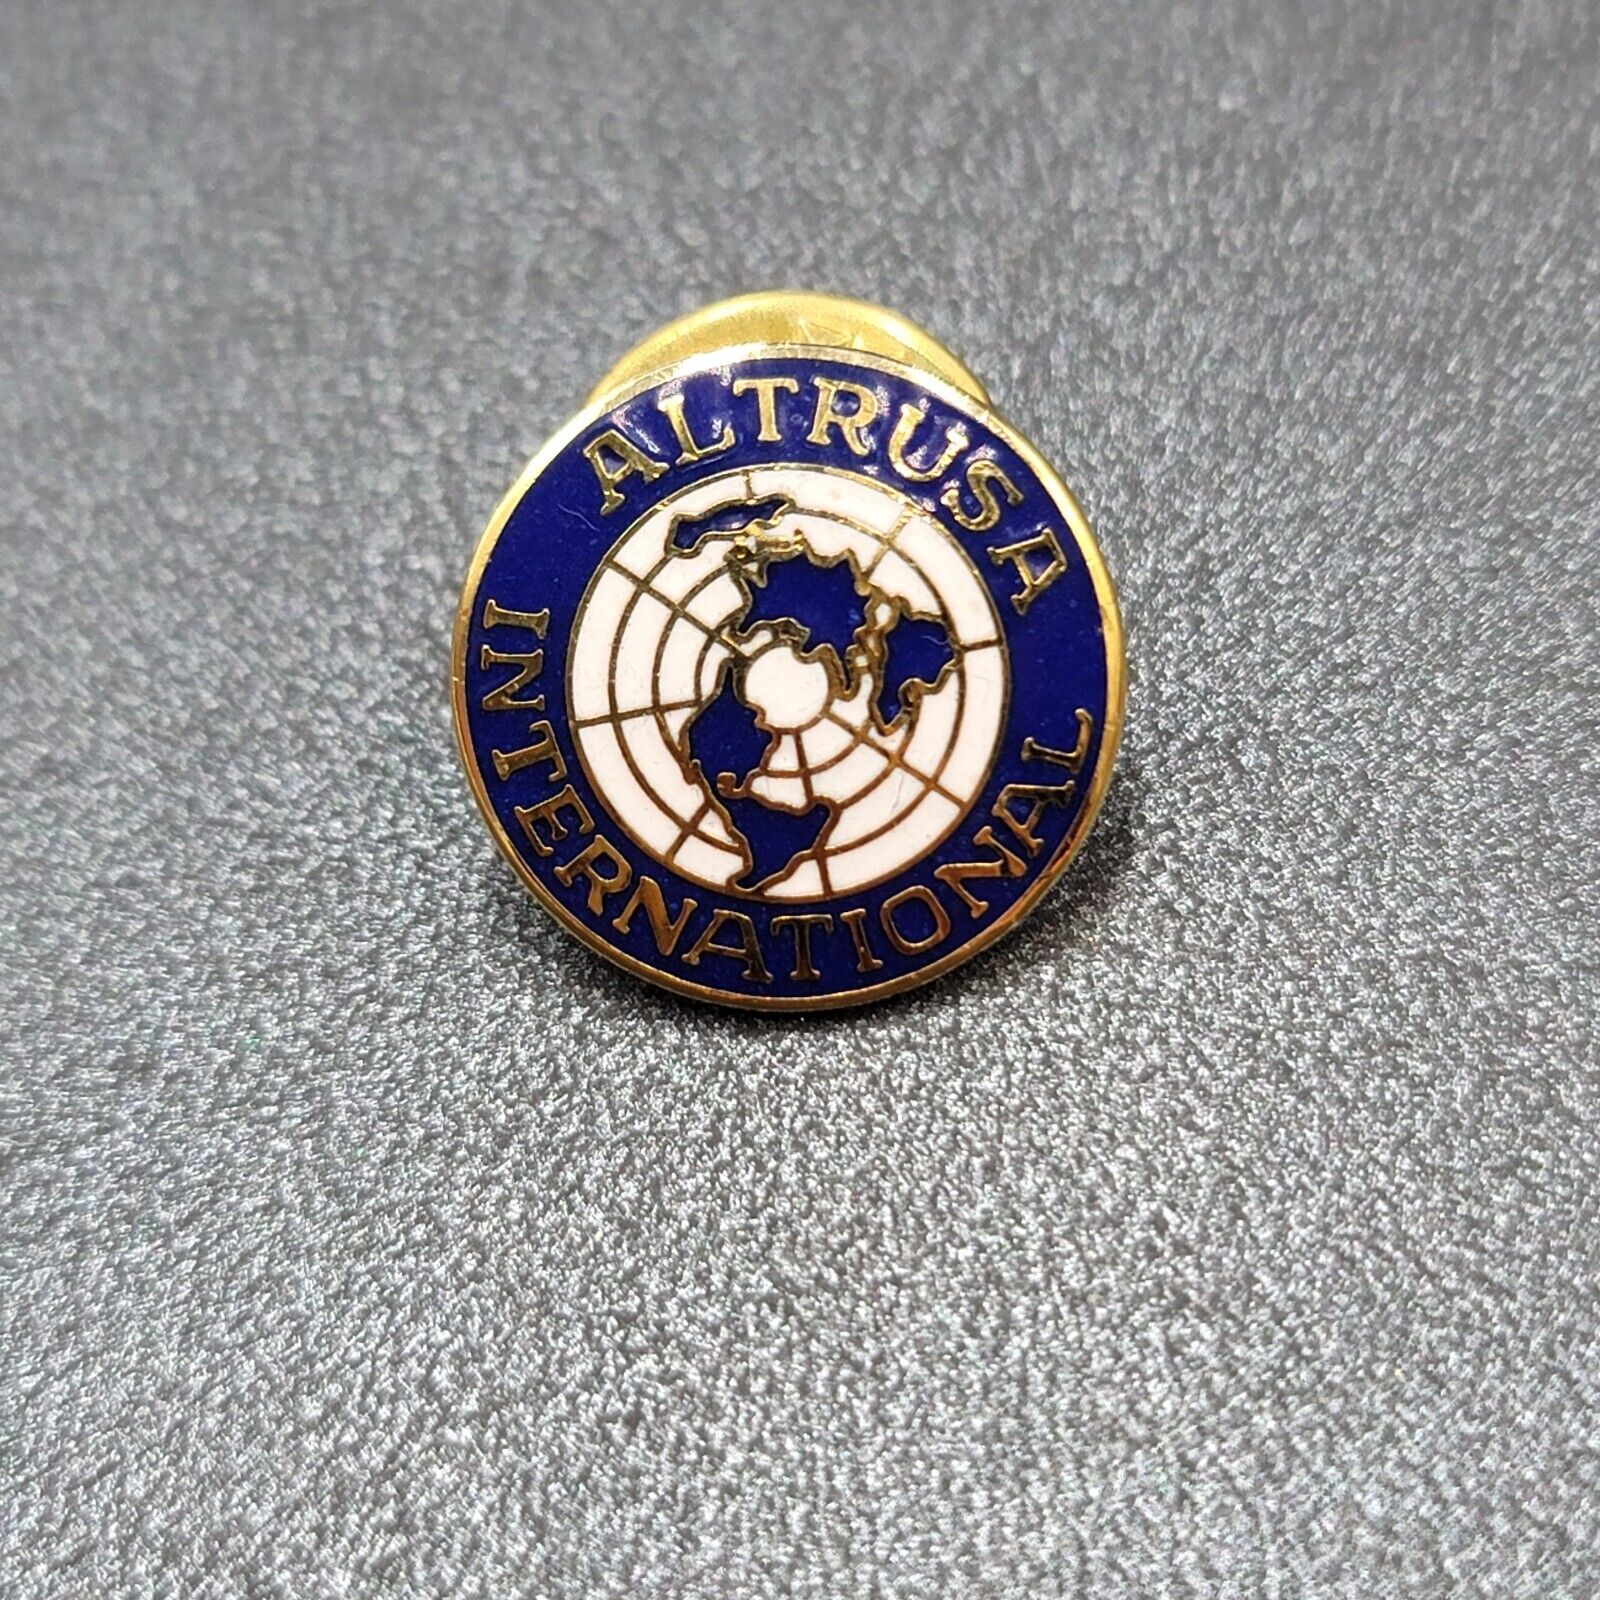 Vintage Altrusa International Club Community Service Pin